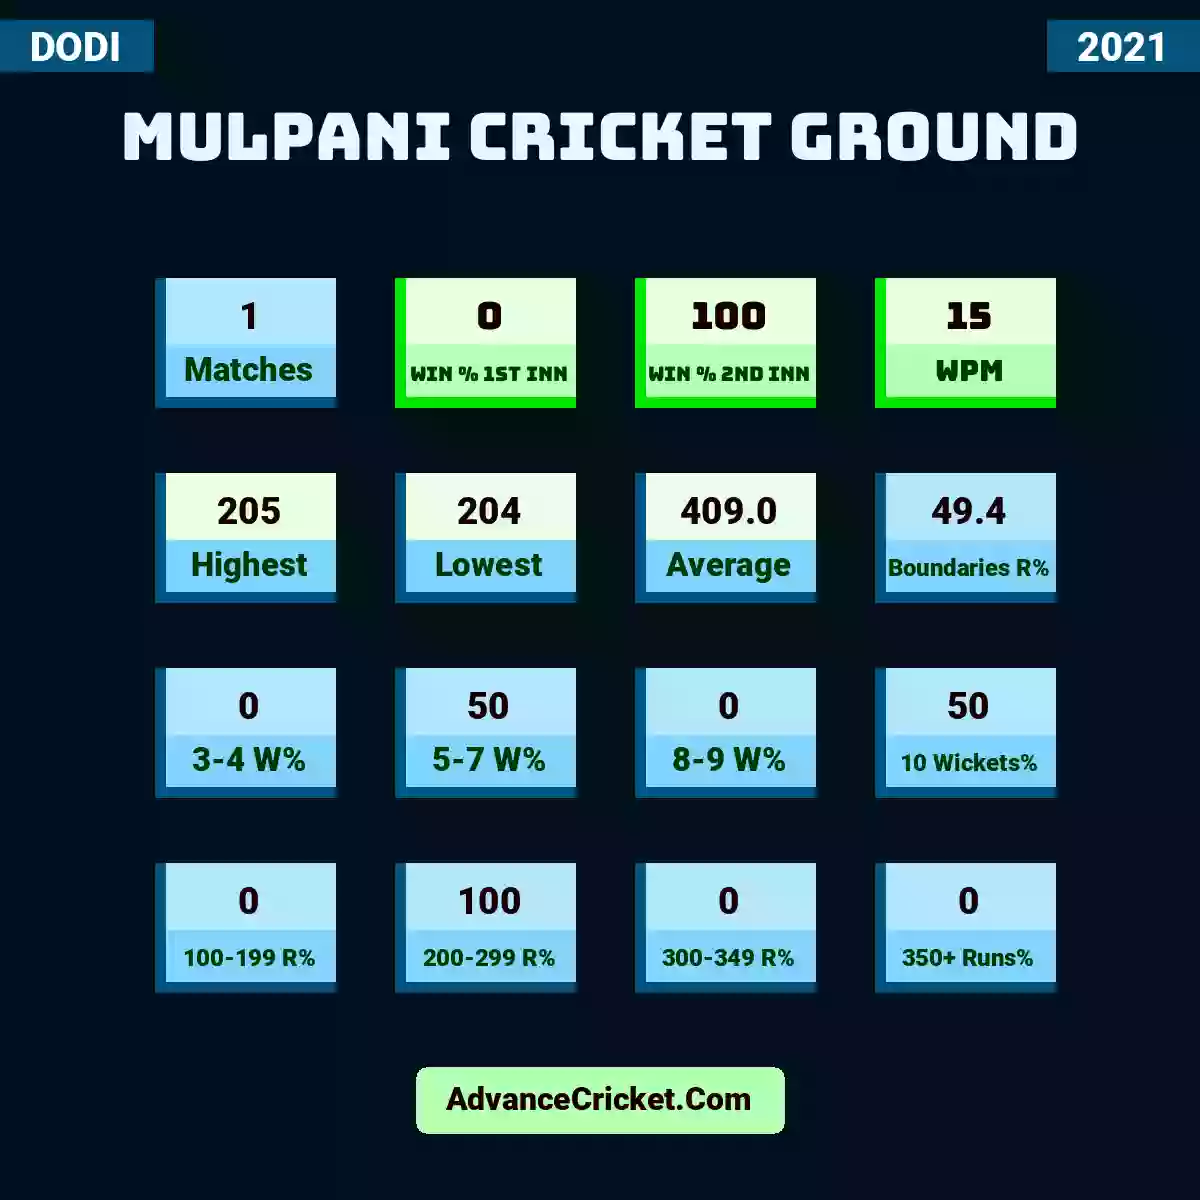 Image showing Mulpani Cricket Ground with Matches: 1, Win % 1st Inn: 0, Win % 2nd Inn: 100, WPM: 15, Highest: 205, Lowest: 204, Average: 409.0, Boundaries R%: 49.4, 3-4 W%: 0, 5-7 W%: 50, 8-9 W%: 0, 10 Wickets%: 50, 100-199 R%: 0, 200-299 R%: 100, 300-349 R%: 0, 350+ Runs%: 0.